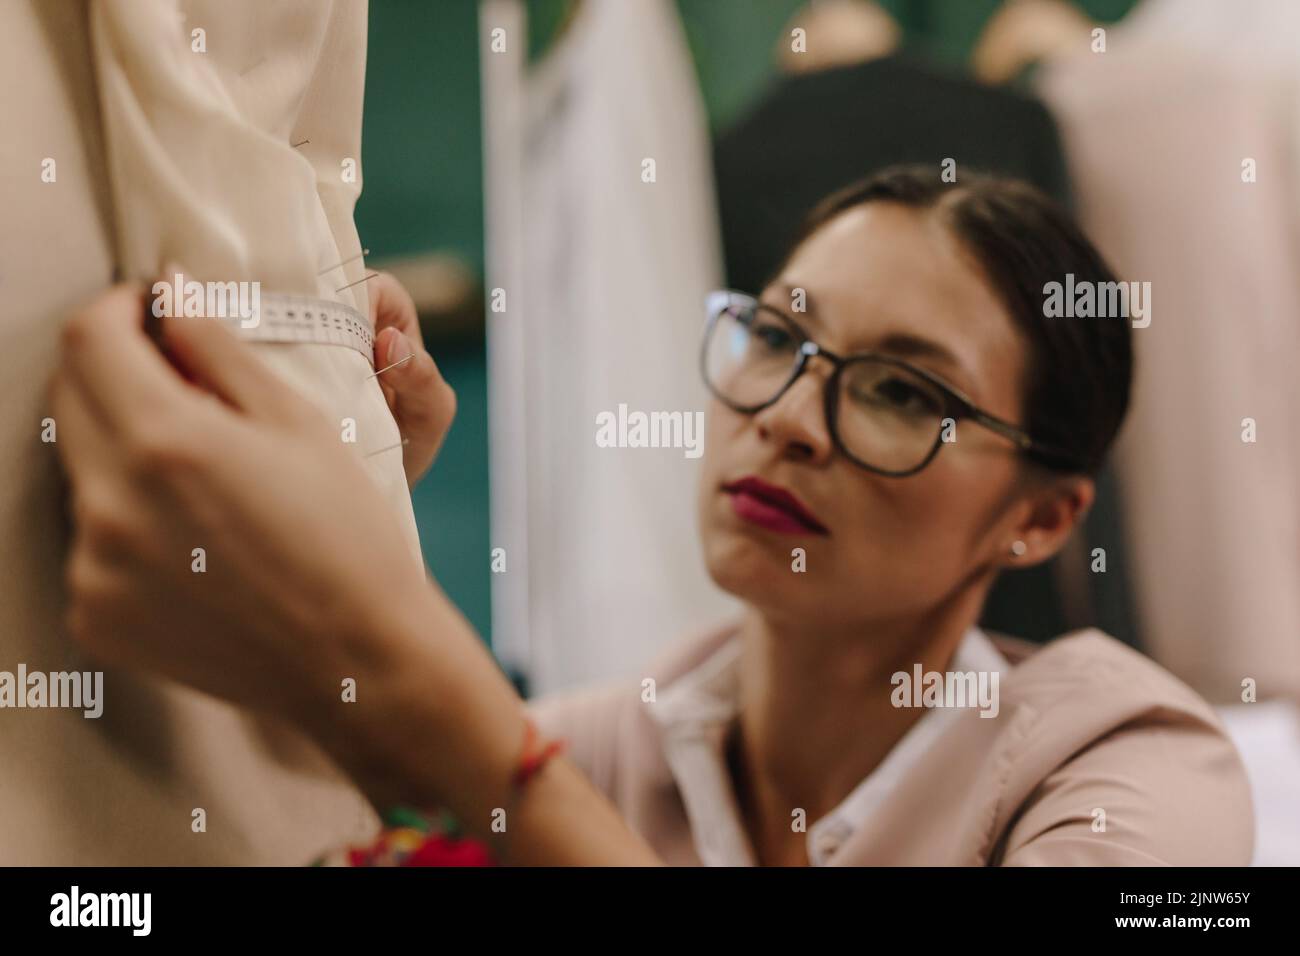 Young woman dressmaker taking measurements of dress on mannequin in her studio. Asian fashion designer adjusting dress on a model. Stock Photo